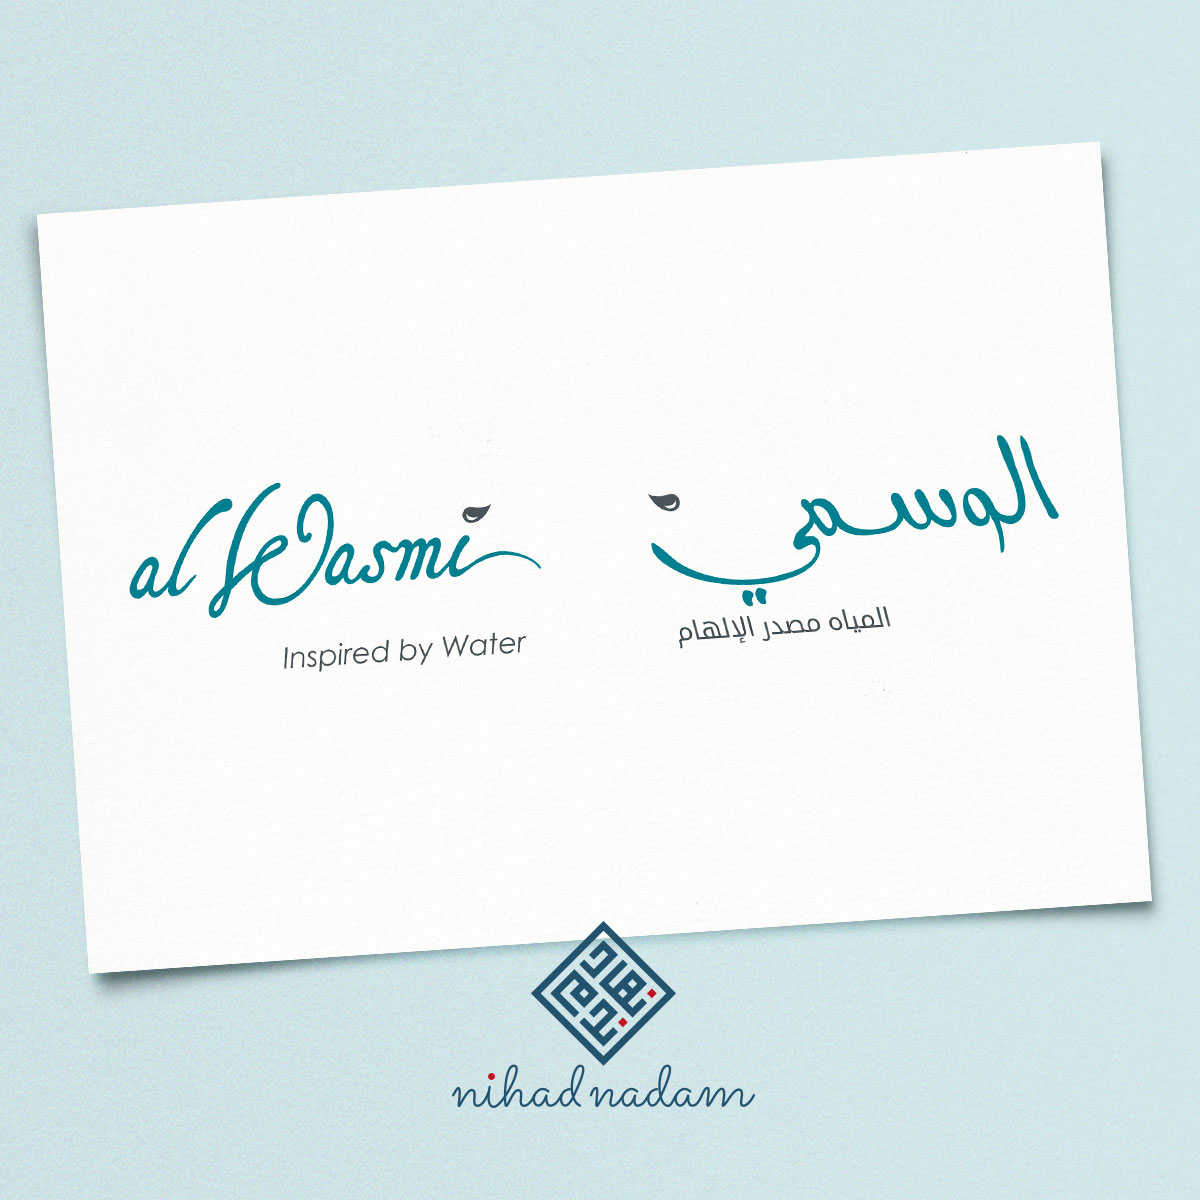 Alwasmi English to Arabic Logo